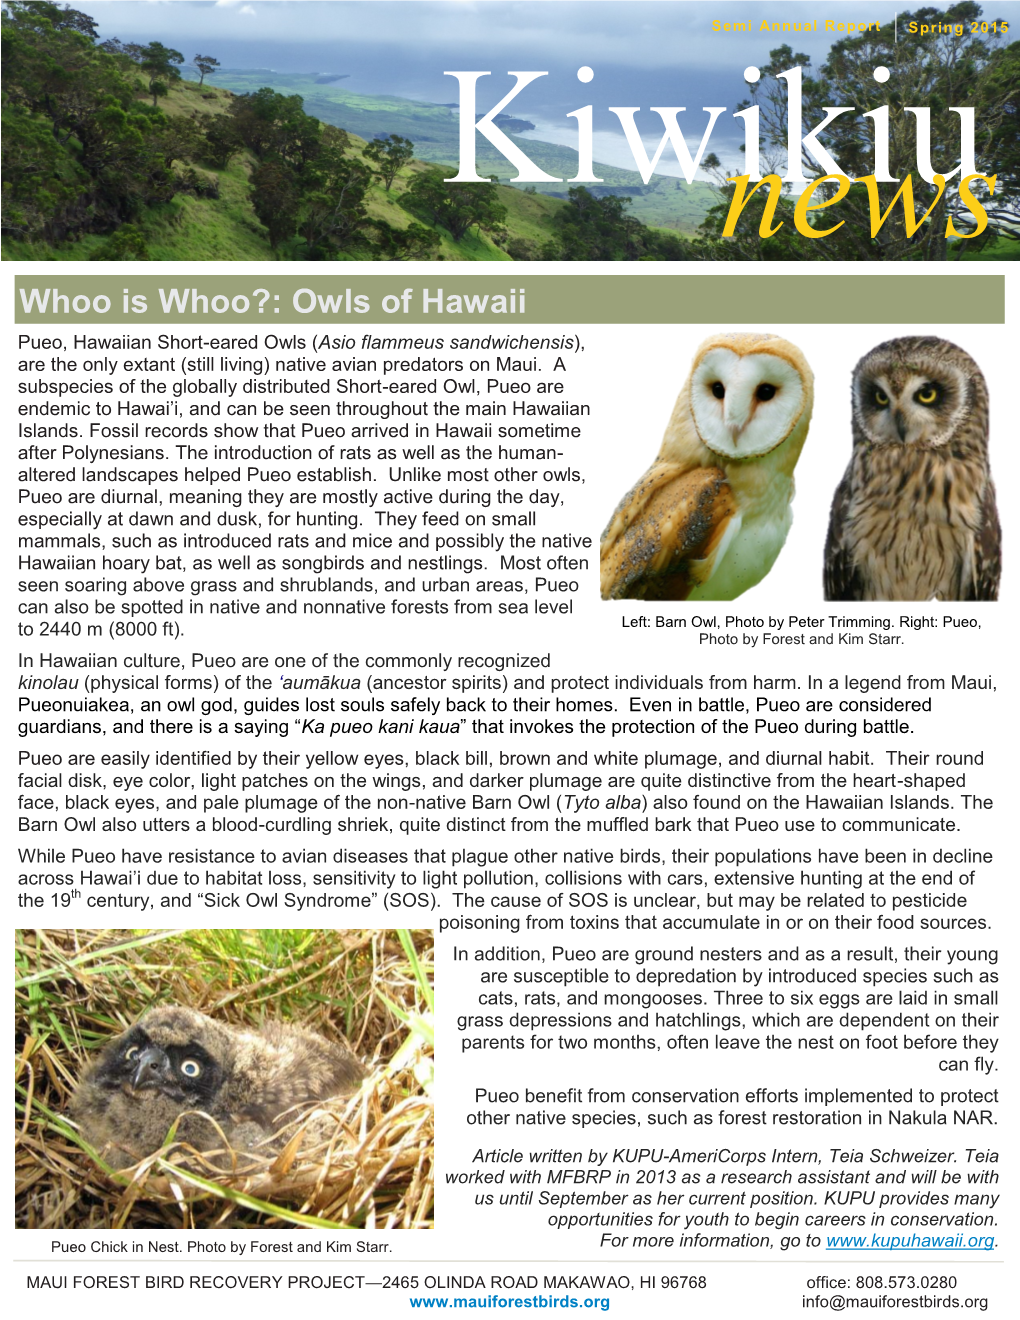 Owls of Hawaii Pueo, Hawaiian Short-Eared Owls (Asio Flammeus Sandwichensis), Are the Only Extant (Still Living) Native Avian Predators on Maui